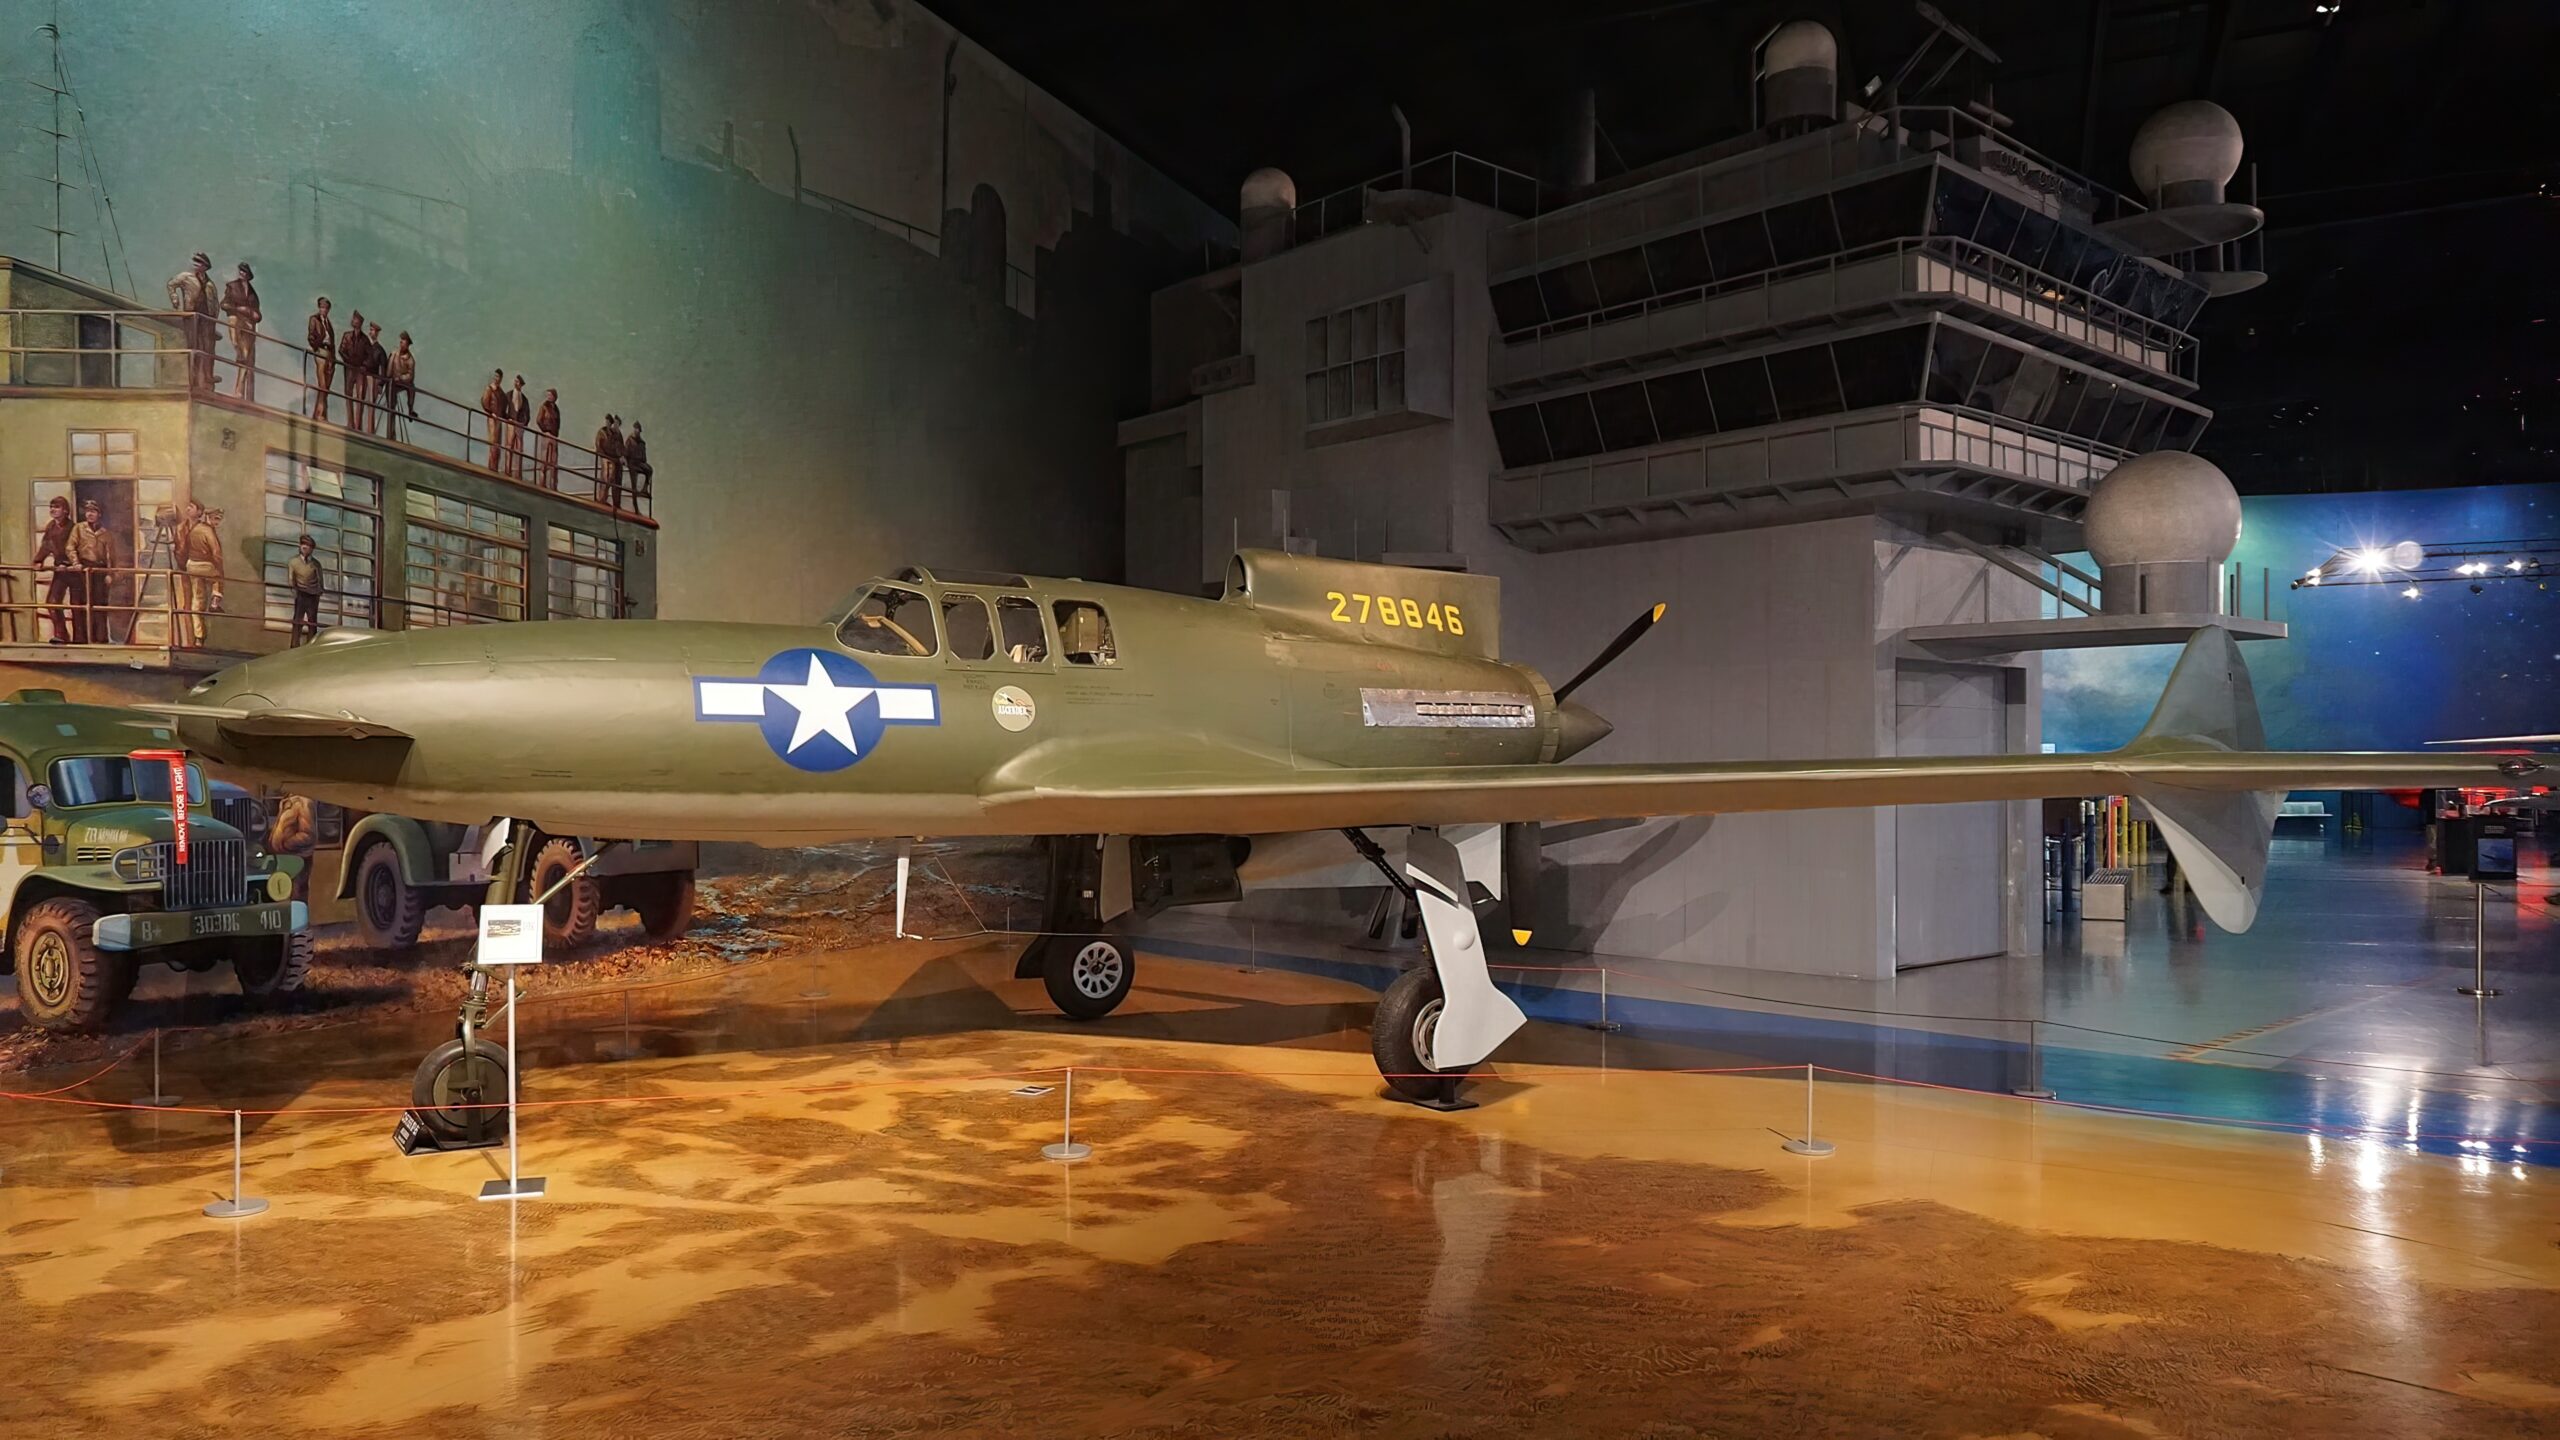 Curtiss-Wright XP-55 Ascender air zoo